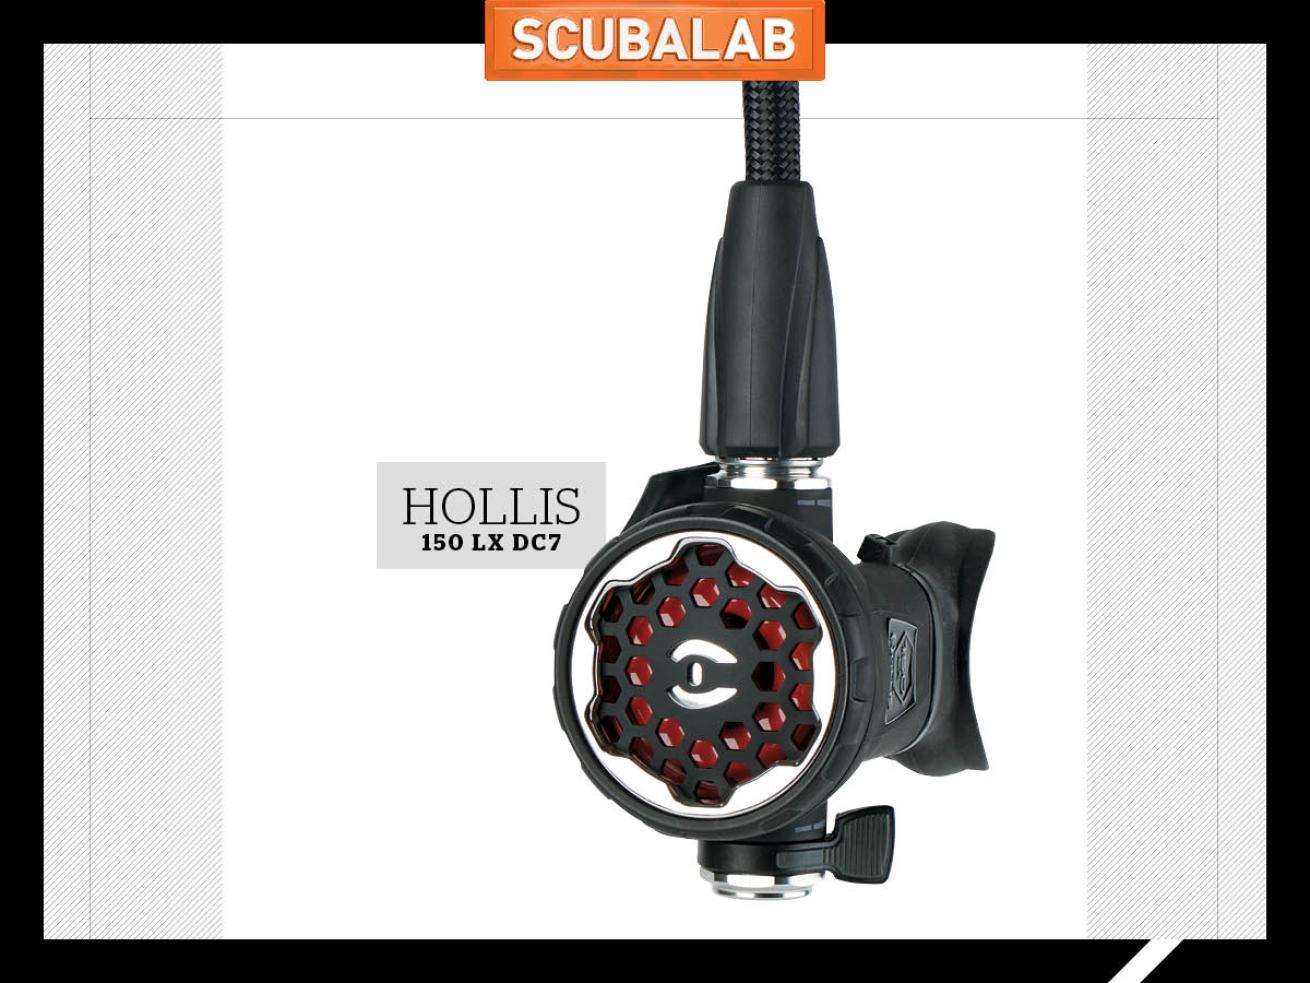 Hollis 150 LX DC7 scuba diving regulator